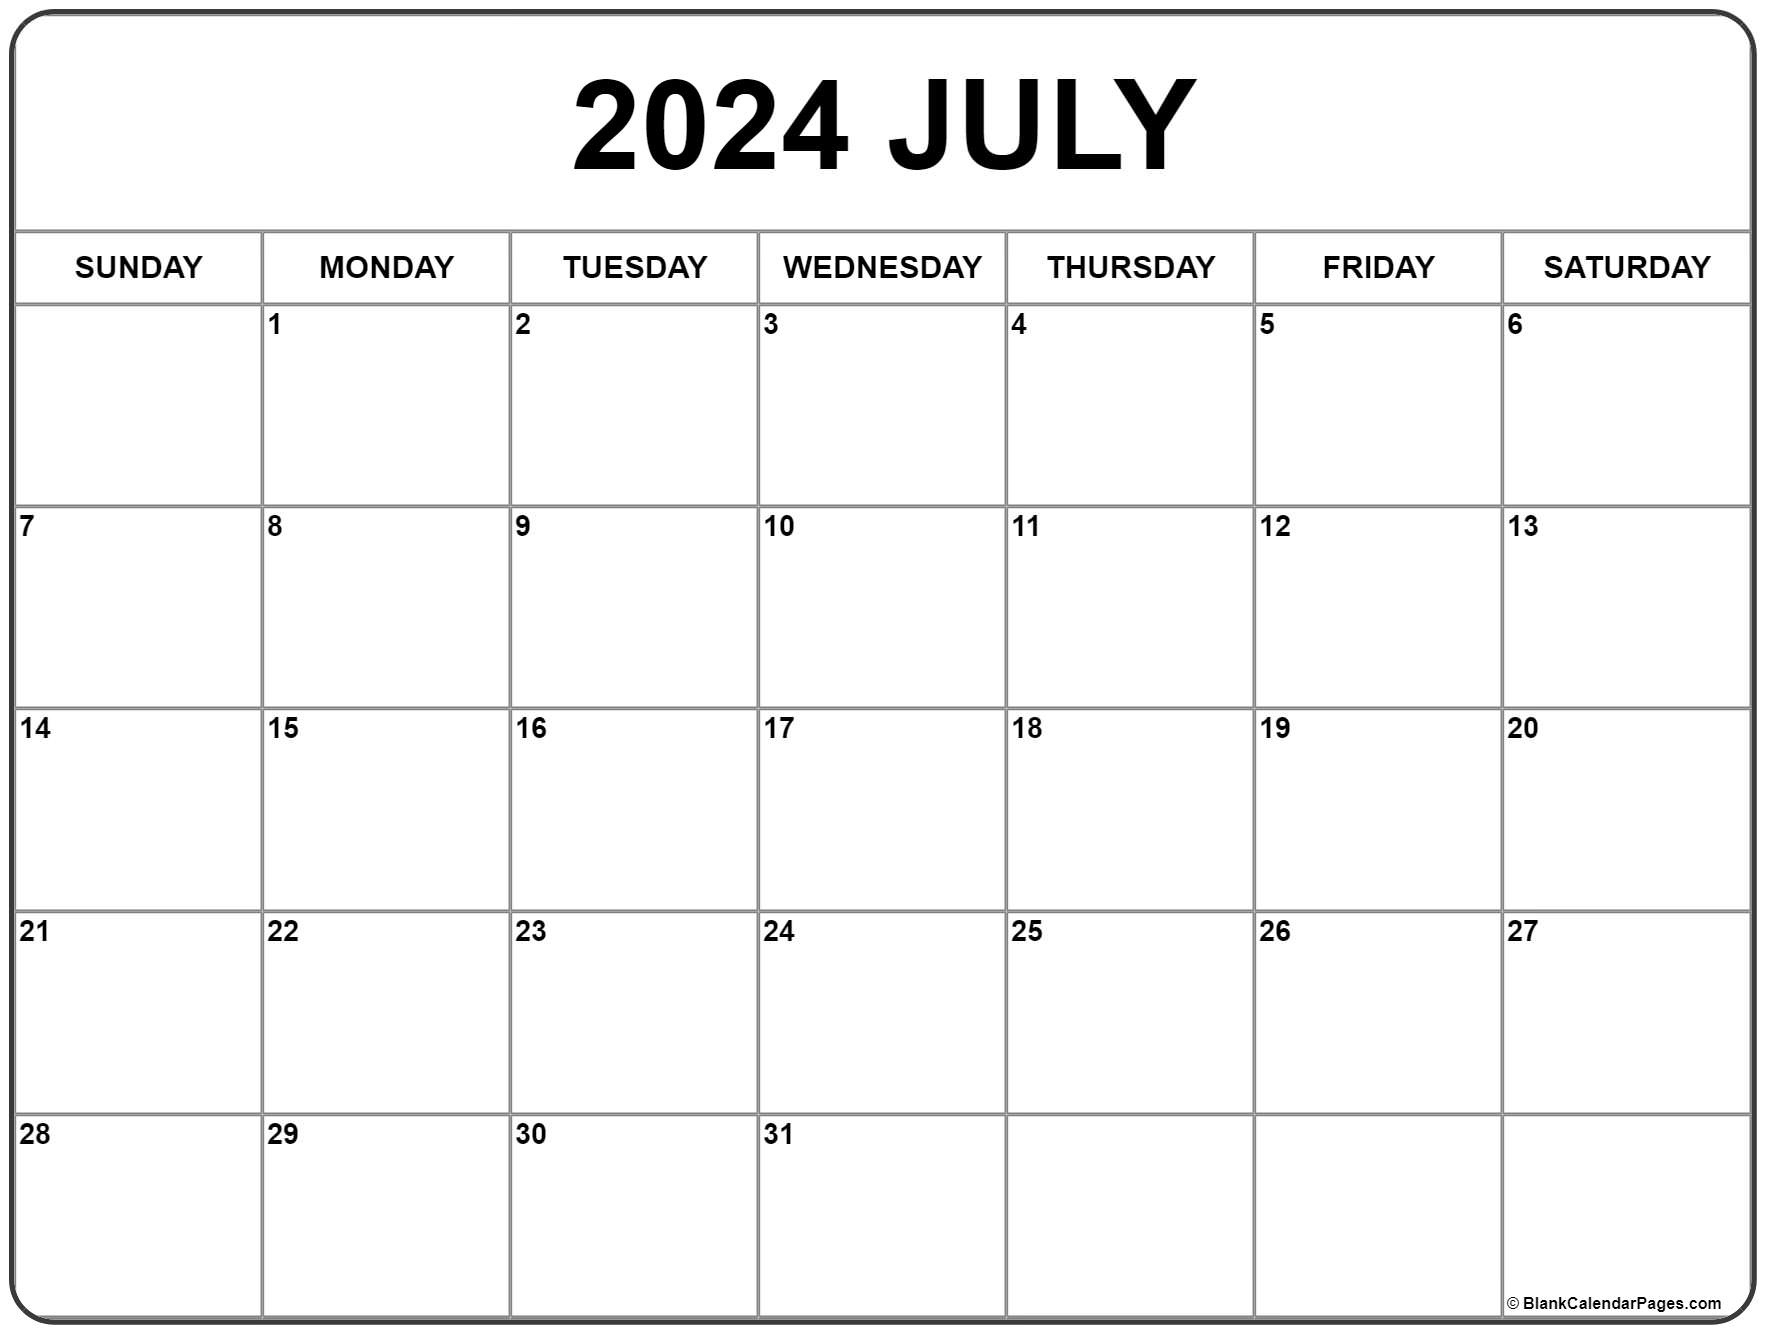 July 2024 Calendar | Free Printable Calendar in July 2024 Free Calendar